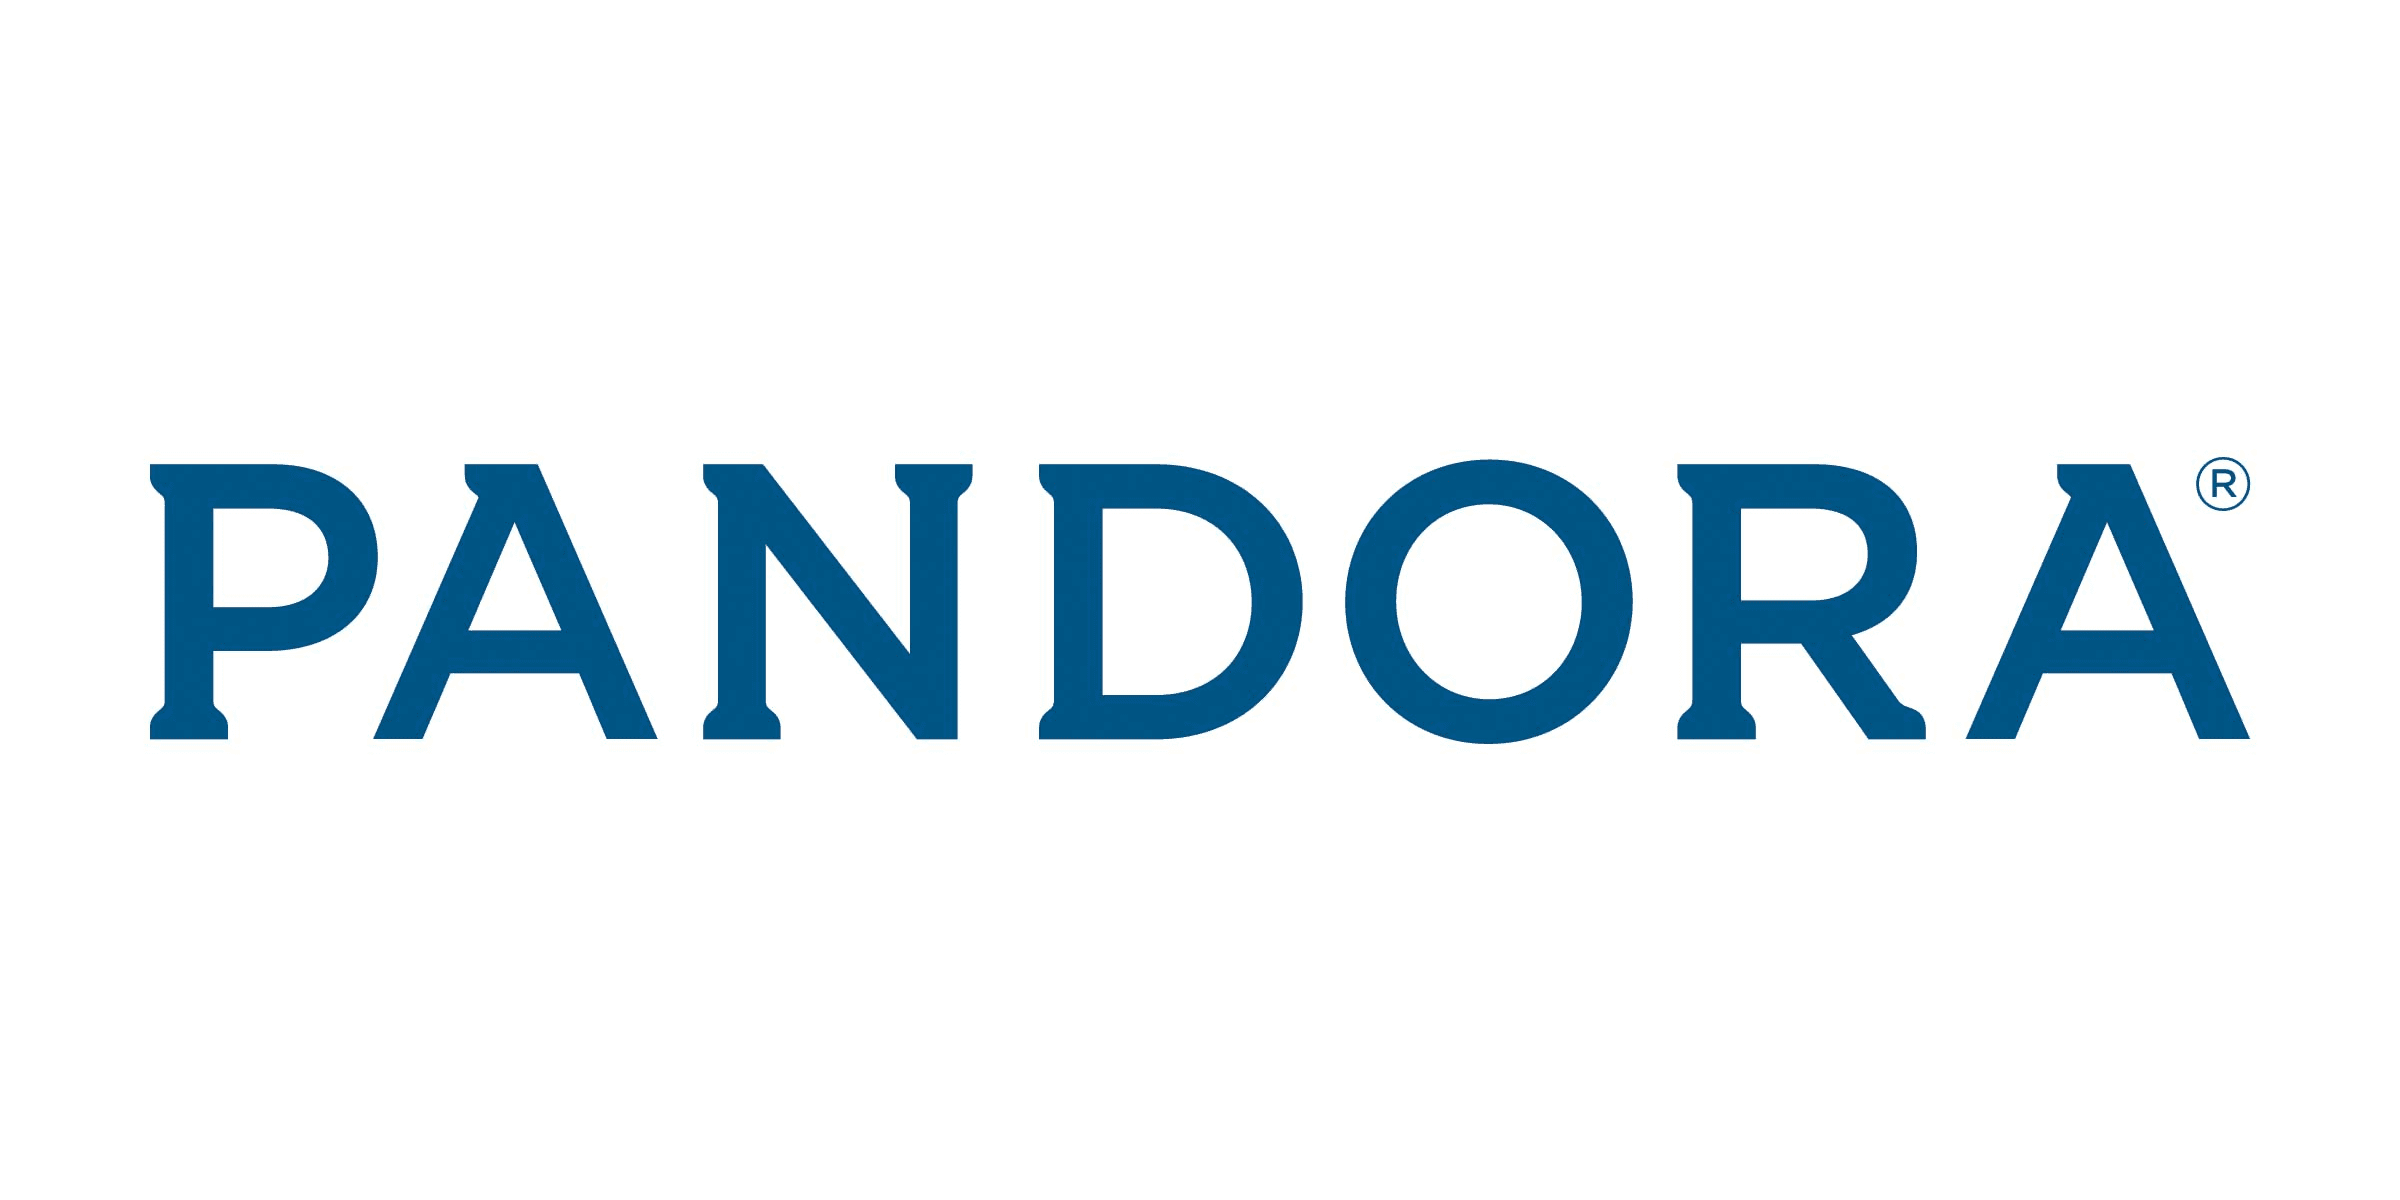 Pandora-logo